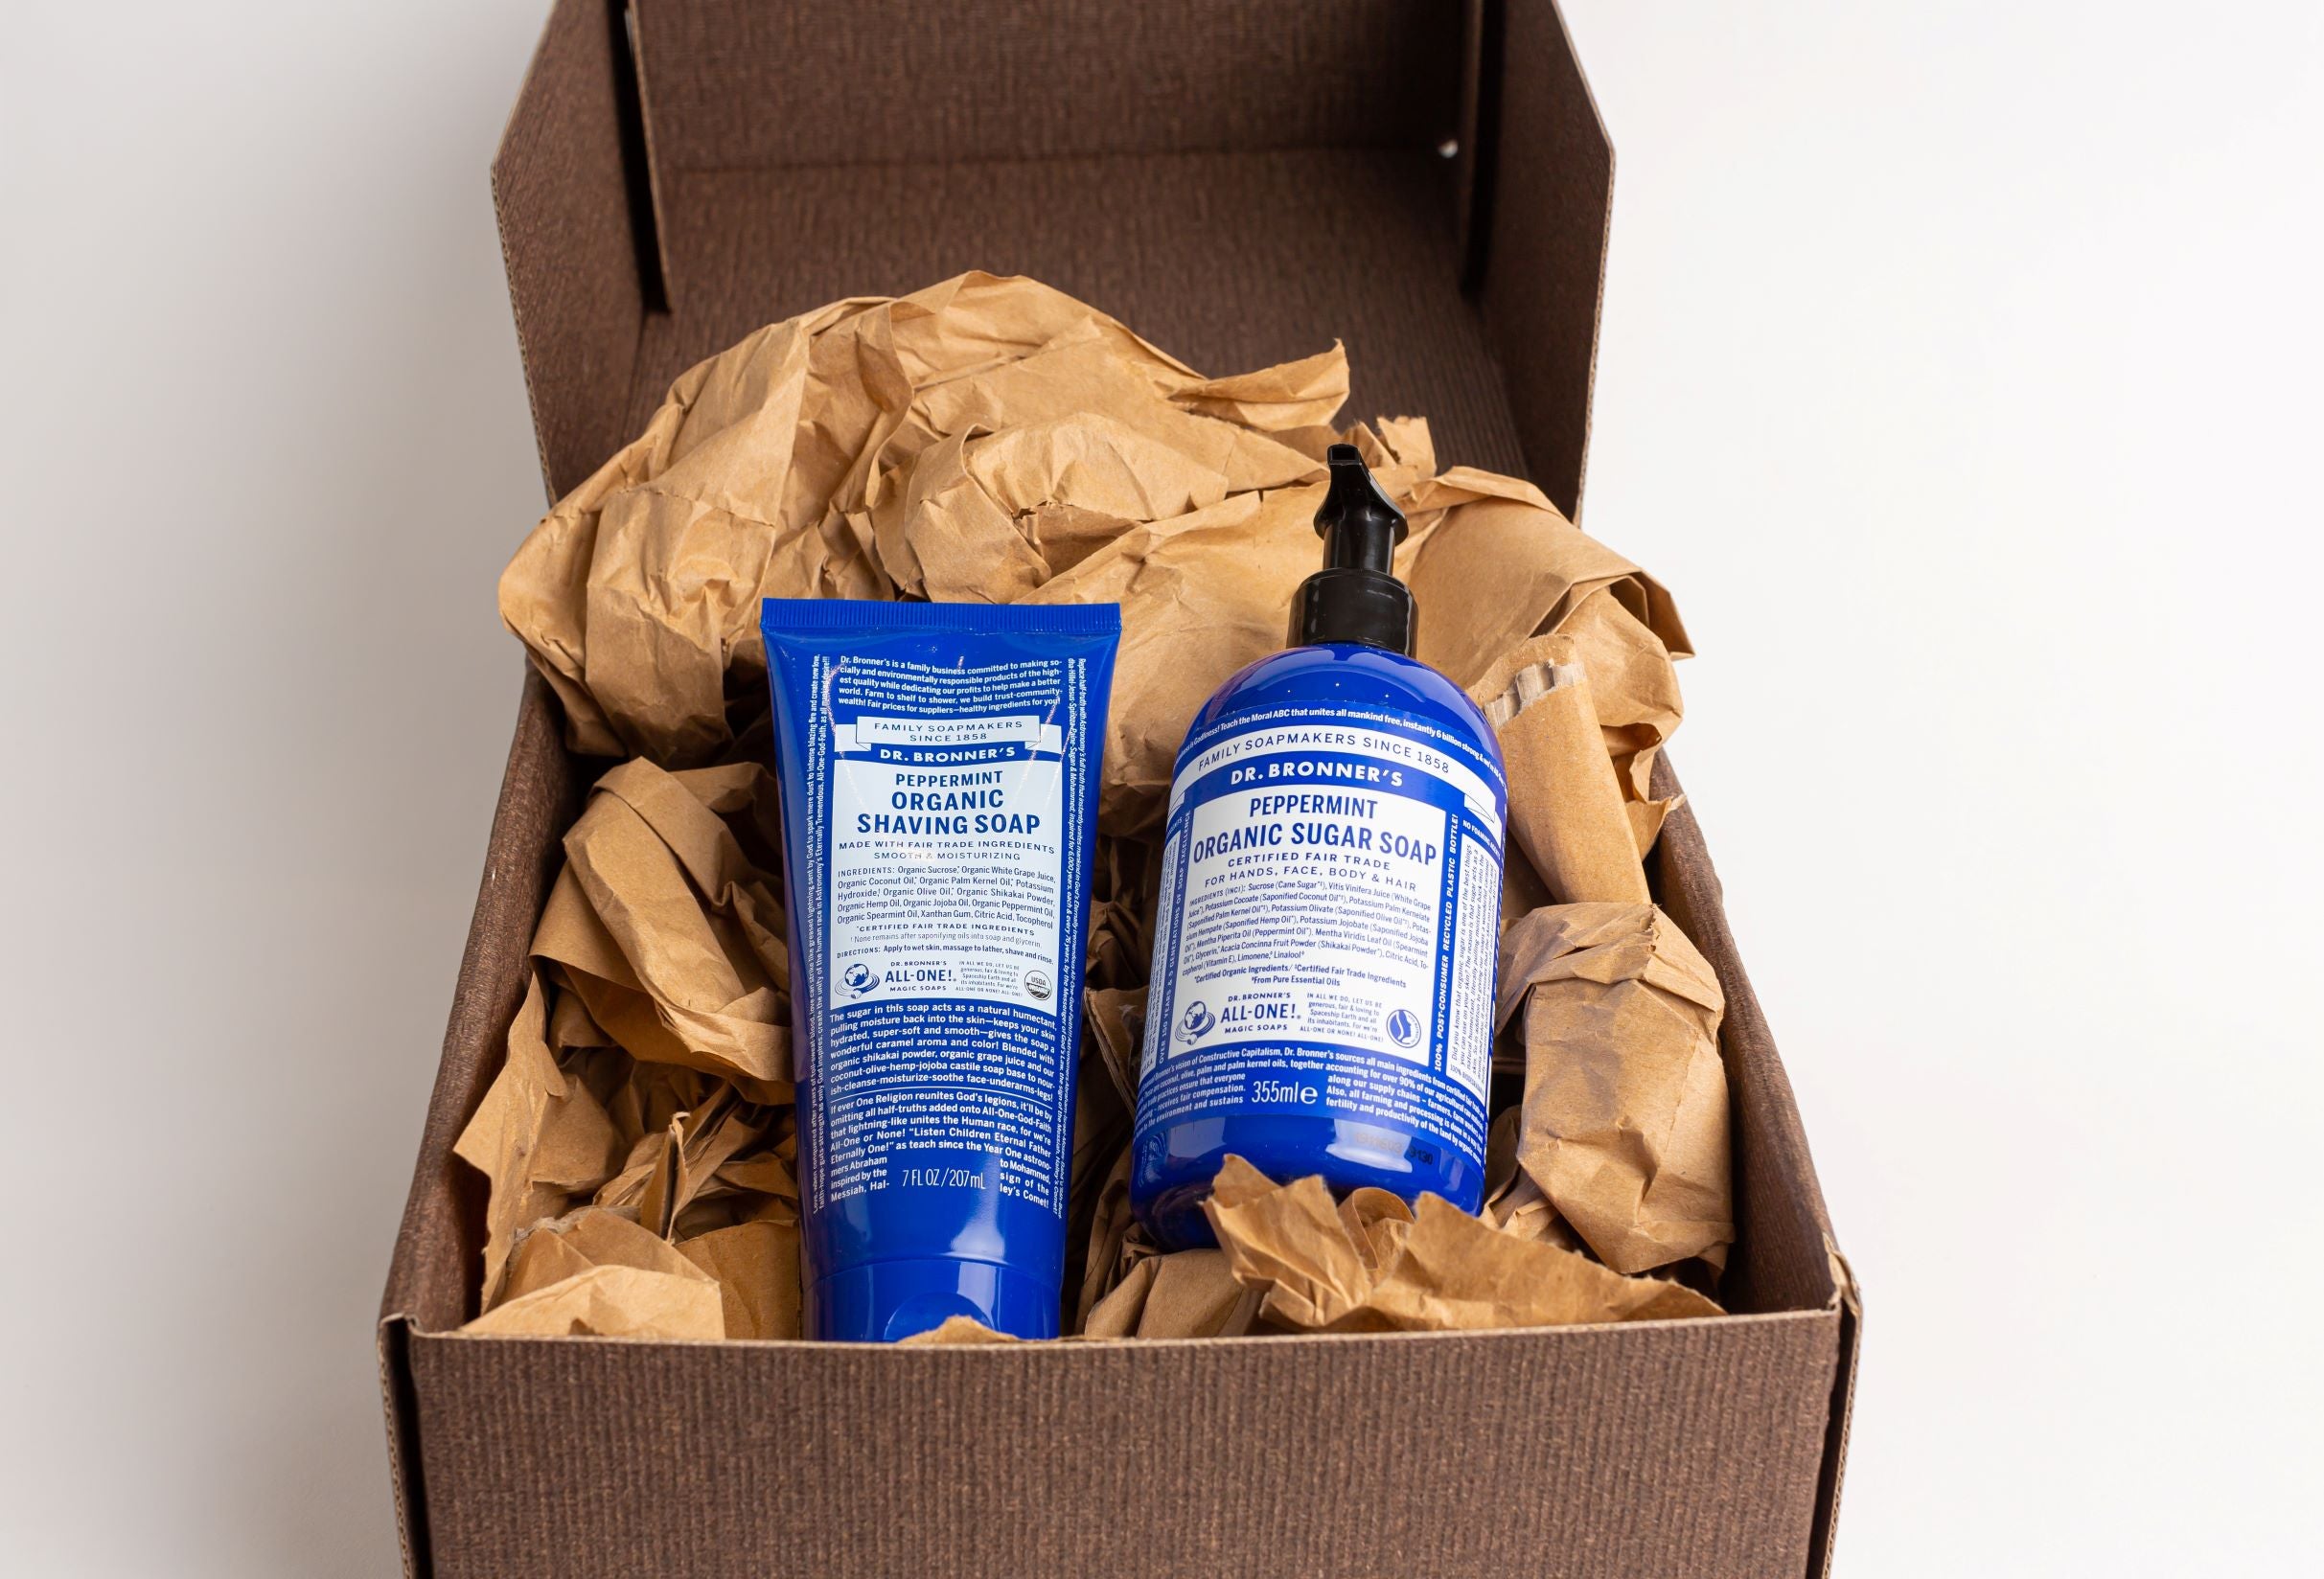 Dr. Bronner's Organic Shaving Soap & Organic Sugar Soap Peppermint Gift Set (207ml & 355ml)